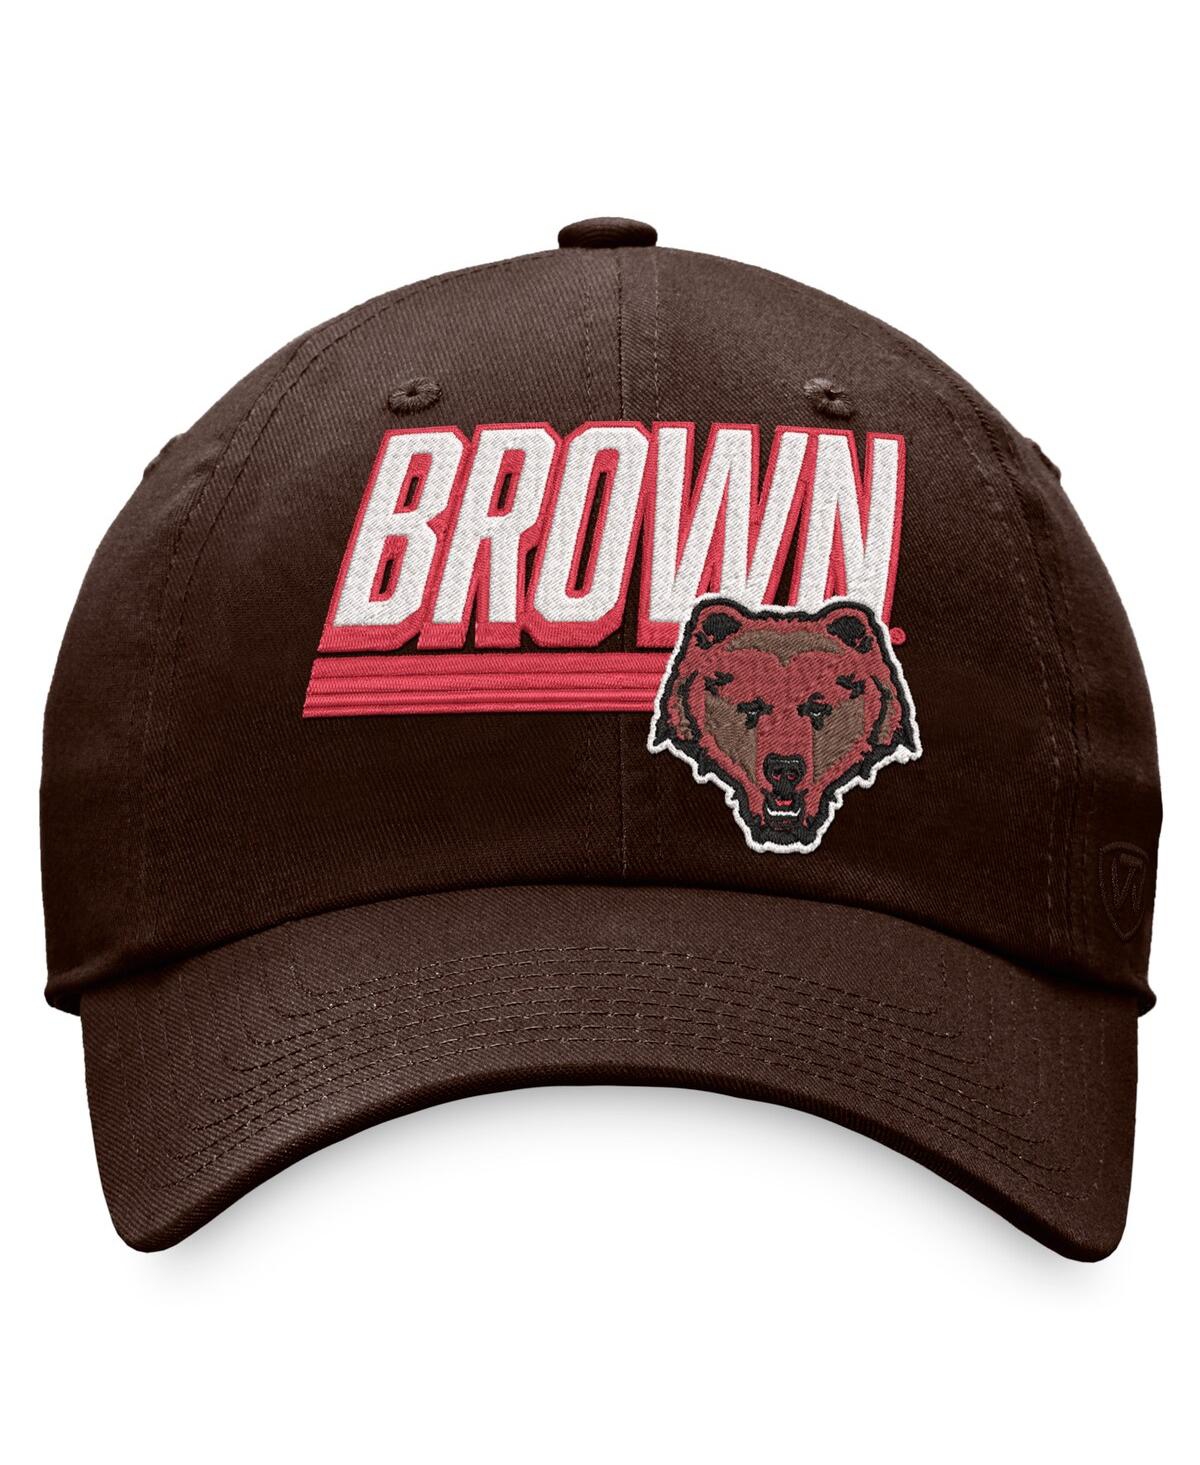 Shop Top Of The World Men's  Brown Brown Bears Slice Adjustable Hat